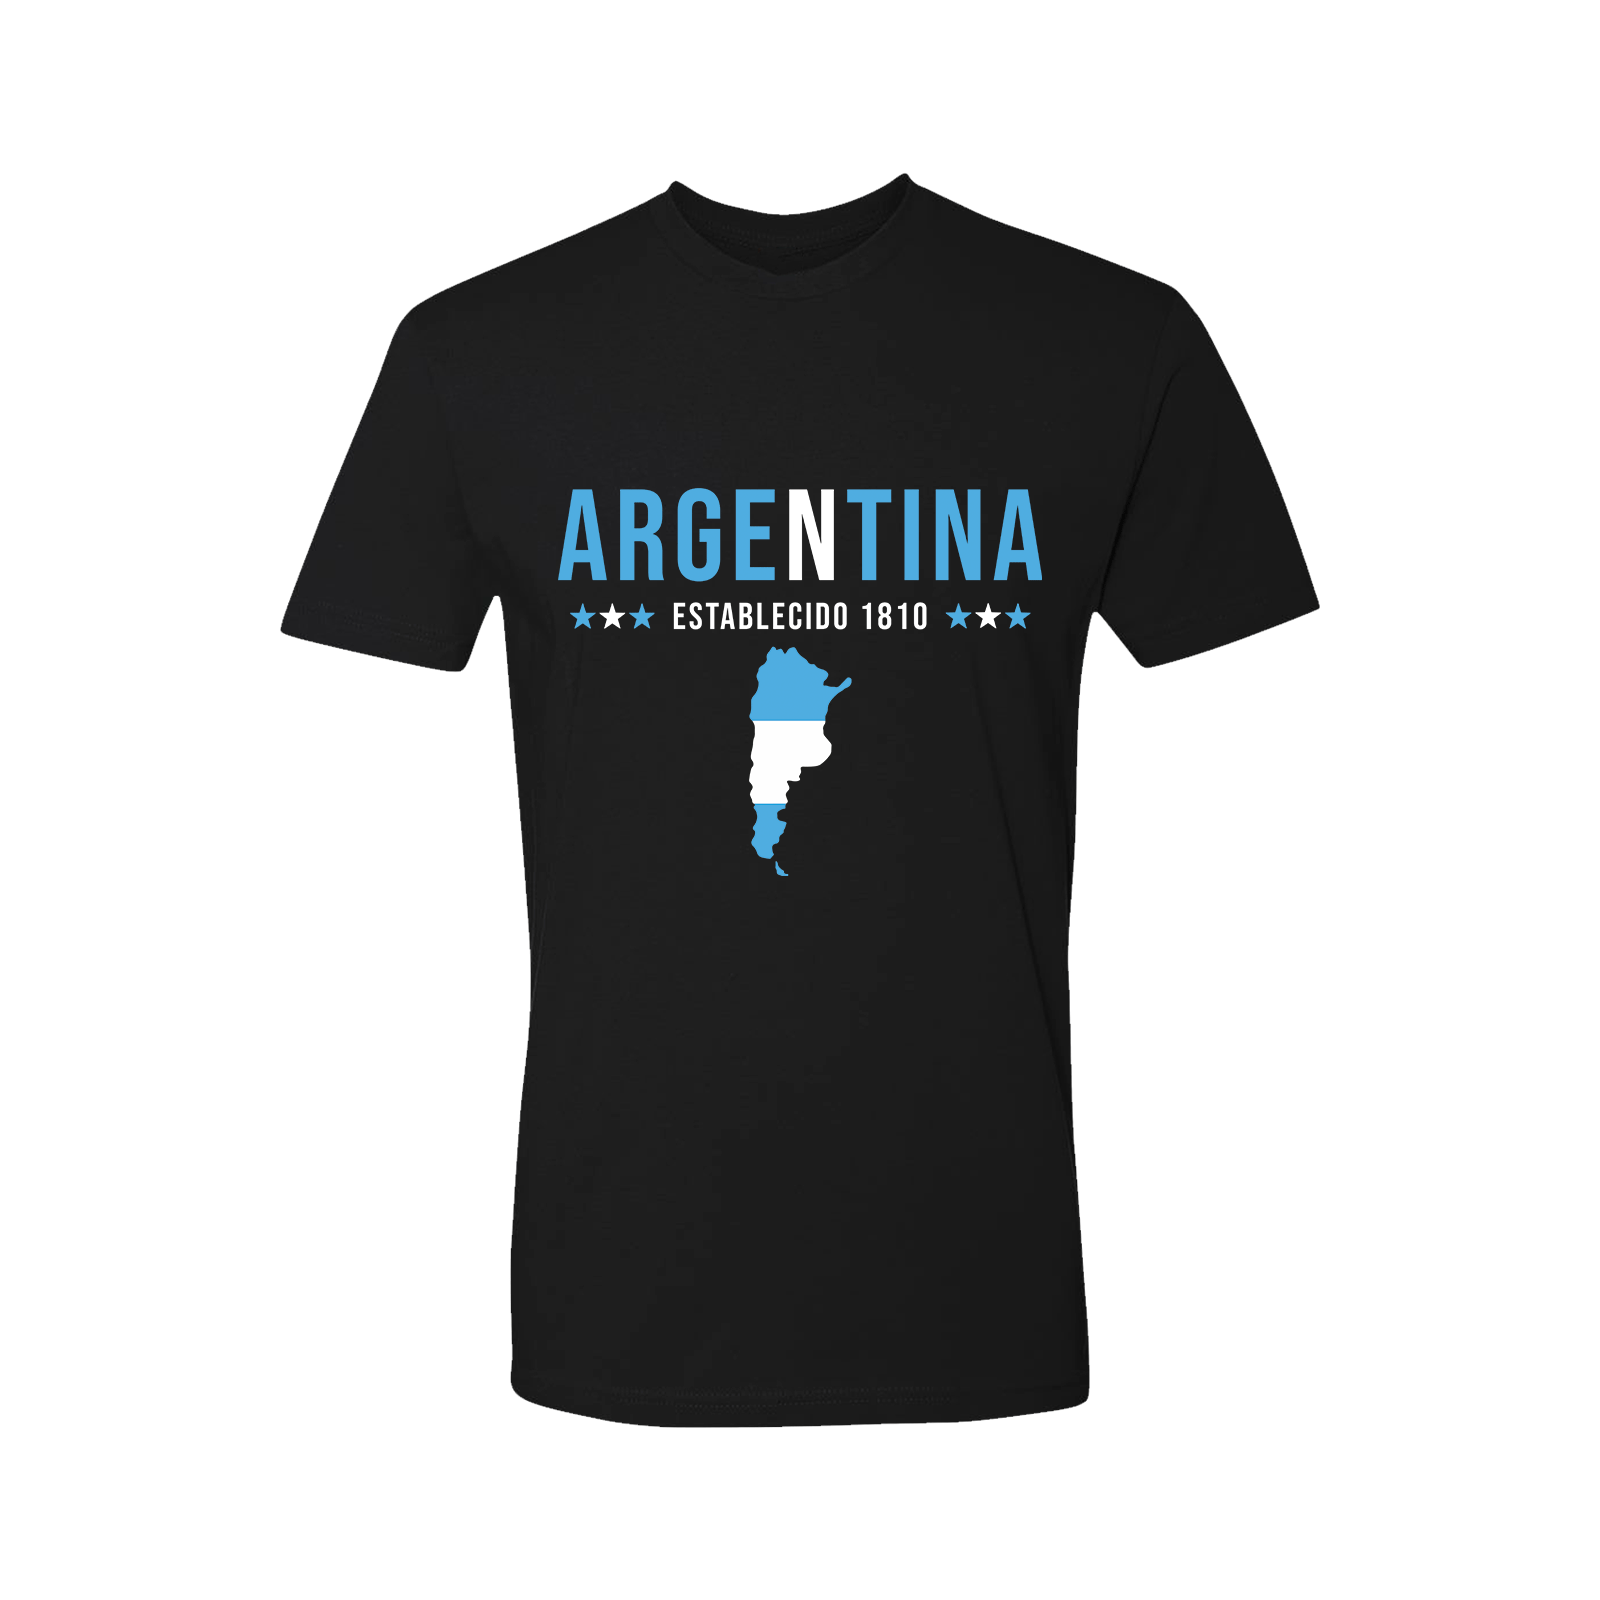 Argentina Short Sleeve Shirt - Adult